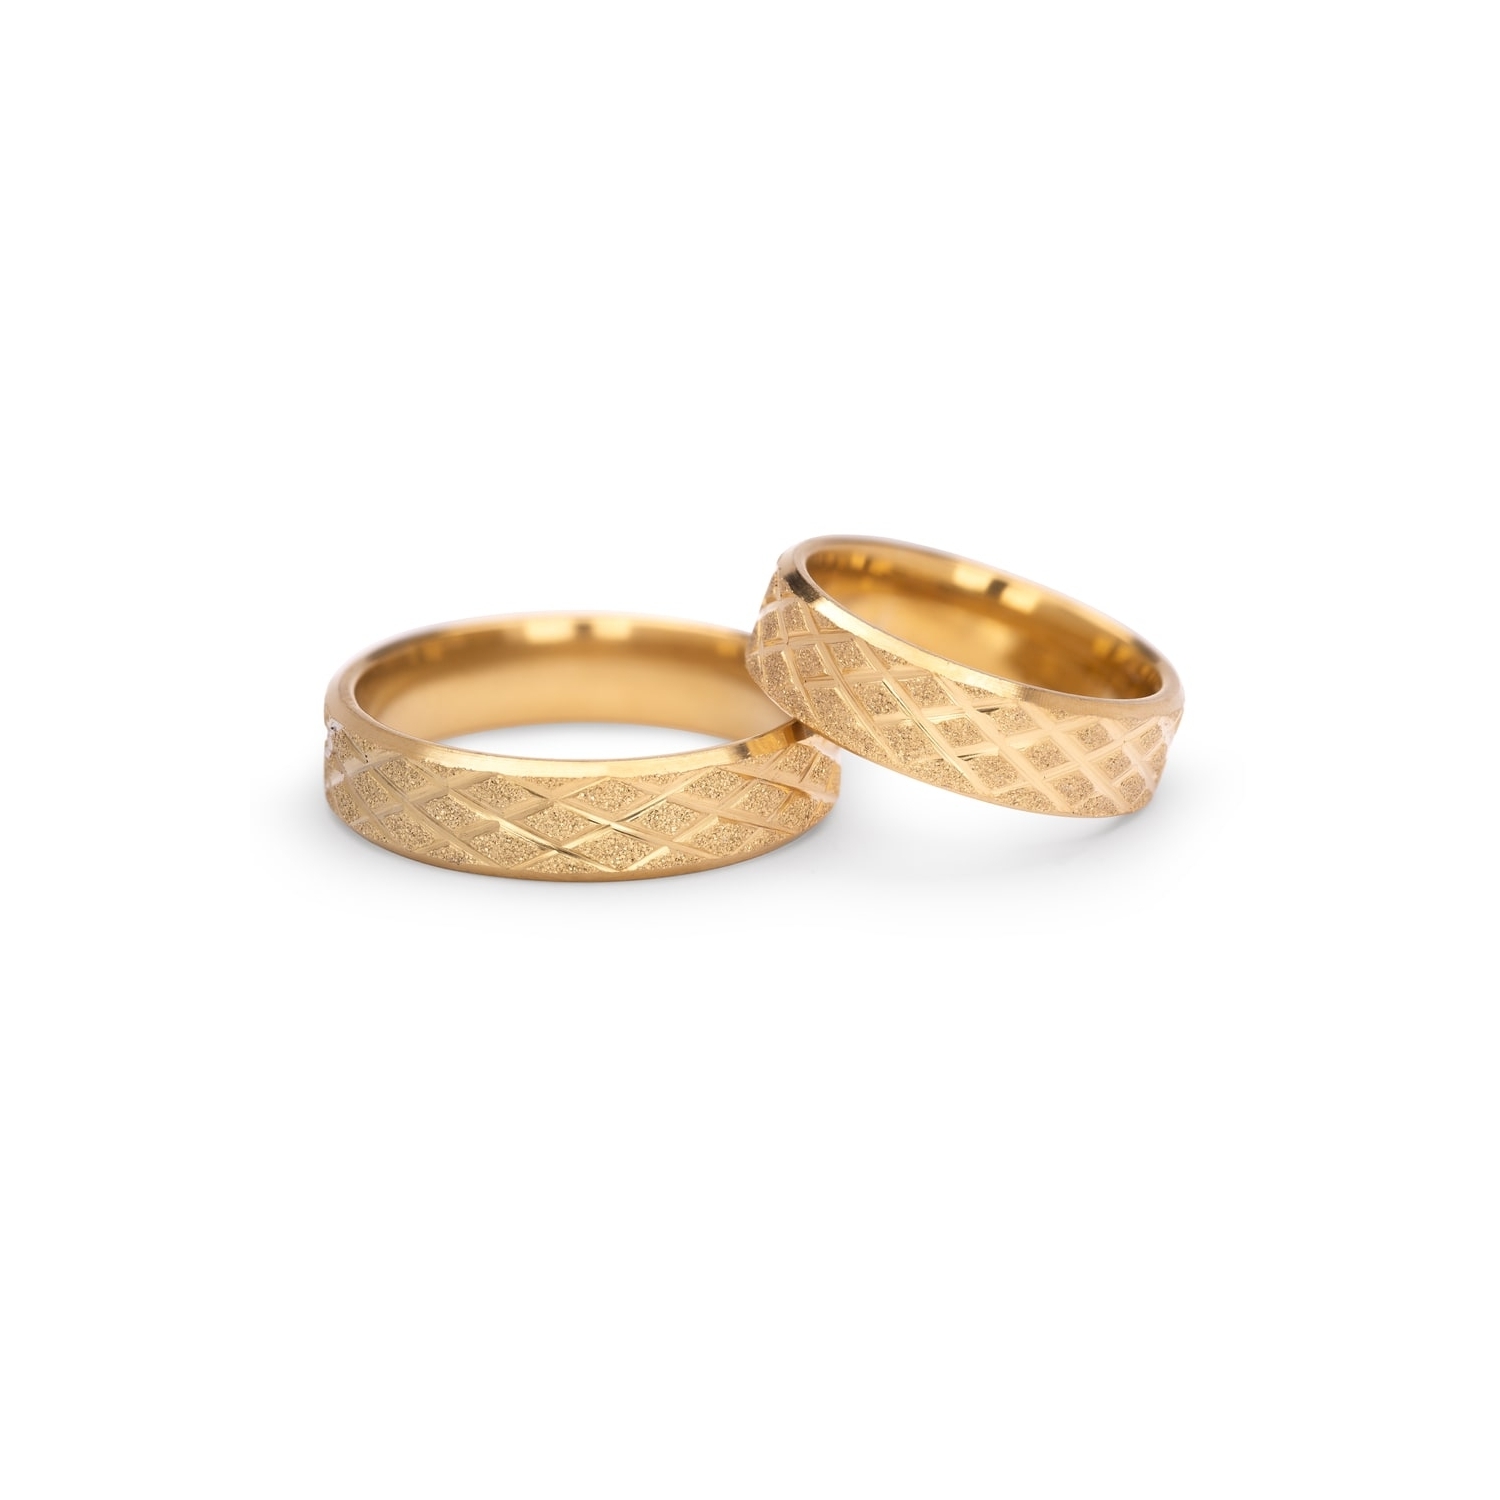 Gold wedding rings "VKA 307"